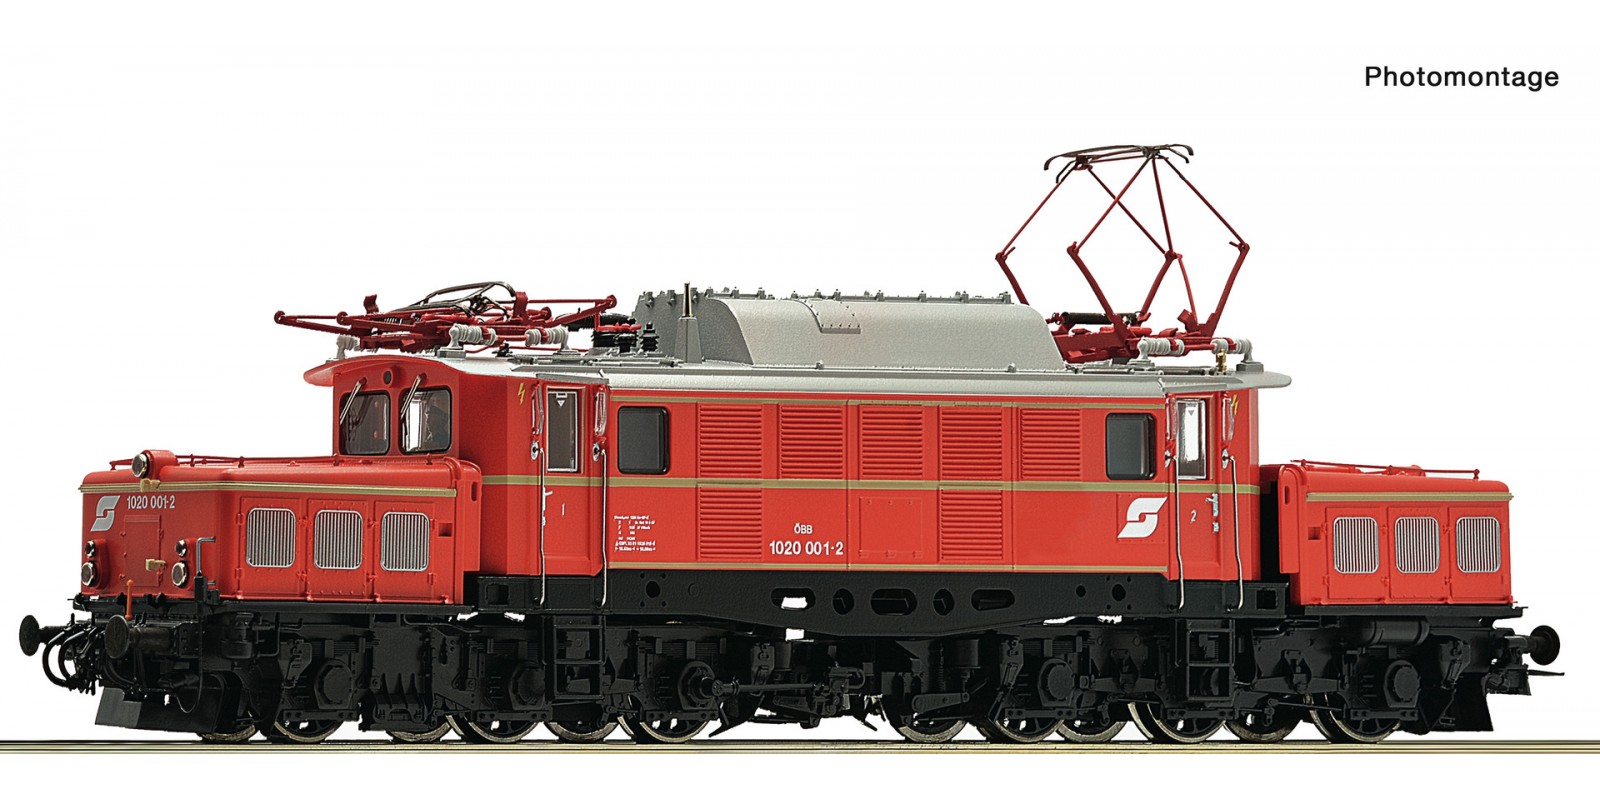 RO7510009 Electric locomotive 1020 001-2 ÖBB